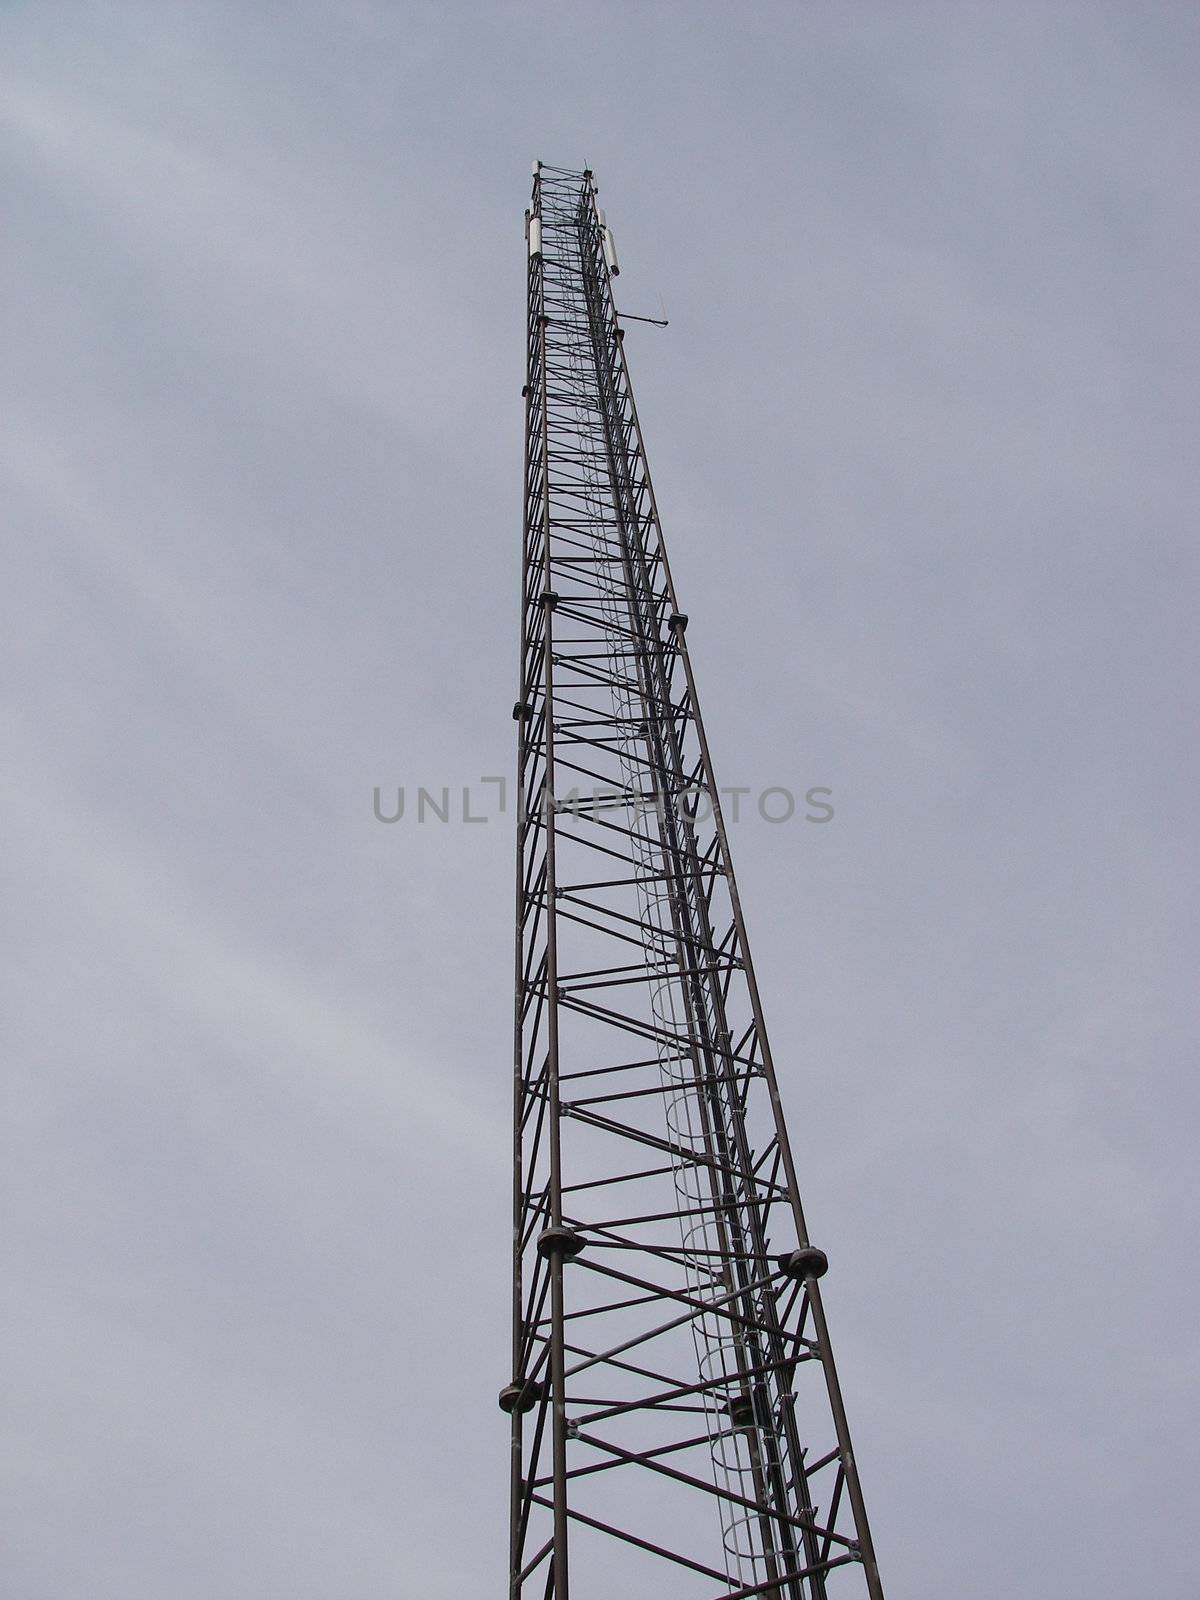 Communication Tower by berkan